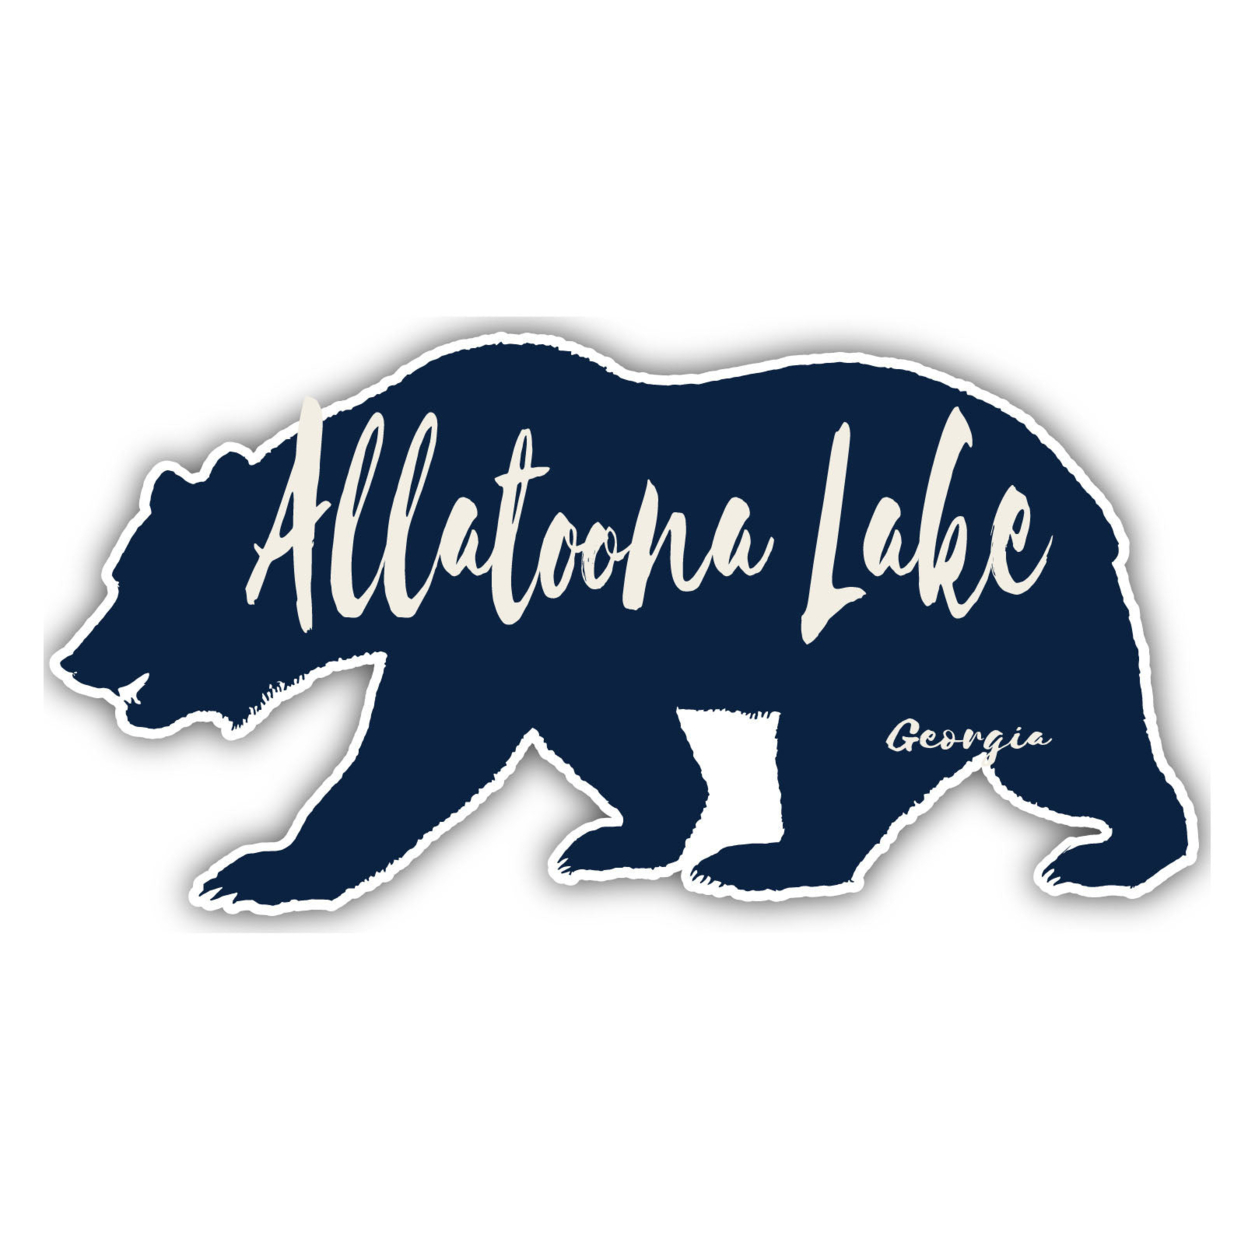 Allatoona Lake Georgia Souvenir Decorative Stickers (Choose Theme And Size) - 4-Pack, 4-Inch, Tent